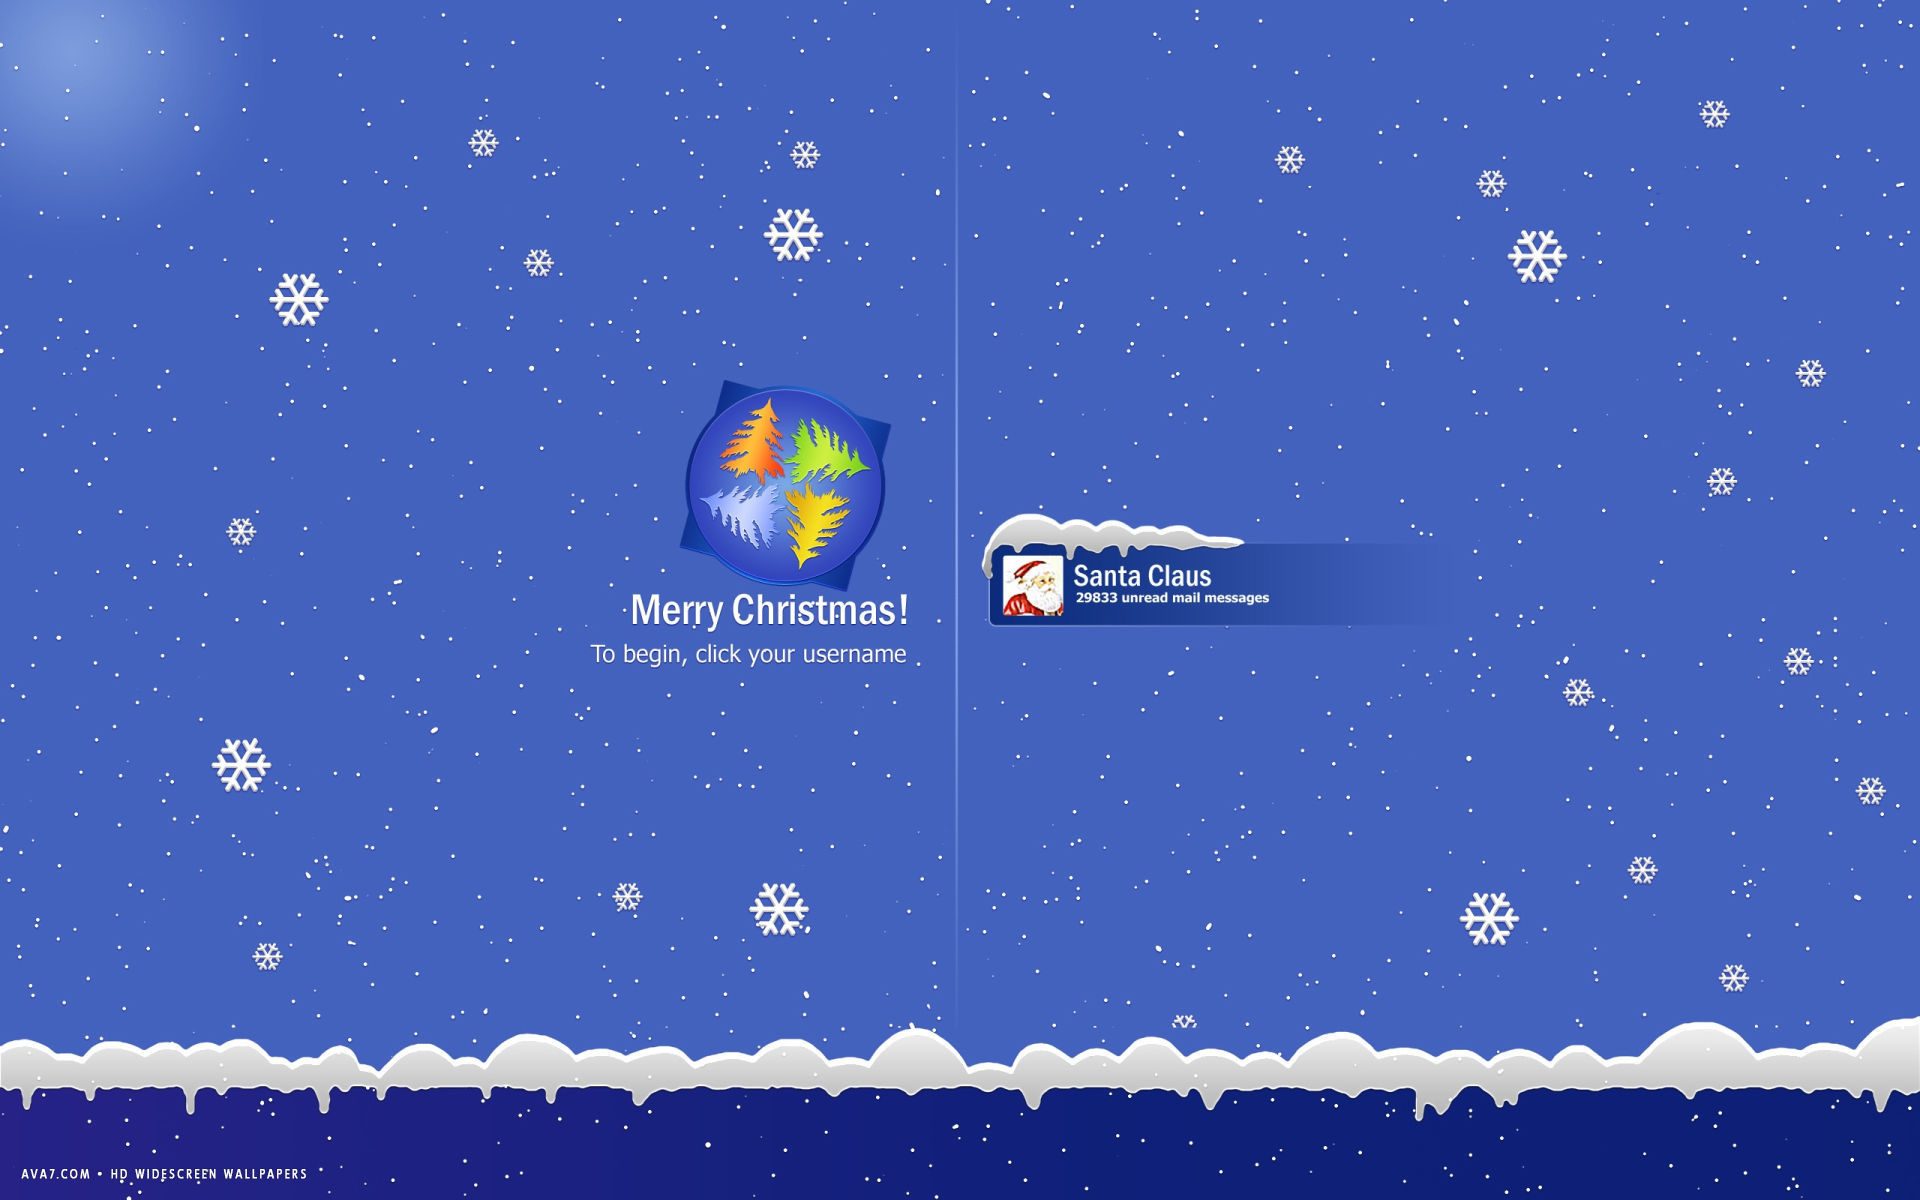 Merry Christmas Windows Login Santa Claus Mail Messages - Windows Xp Snow Background - HD Wallpaper 